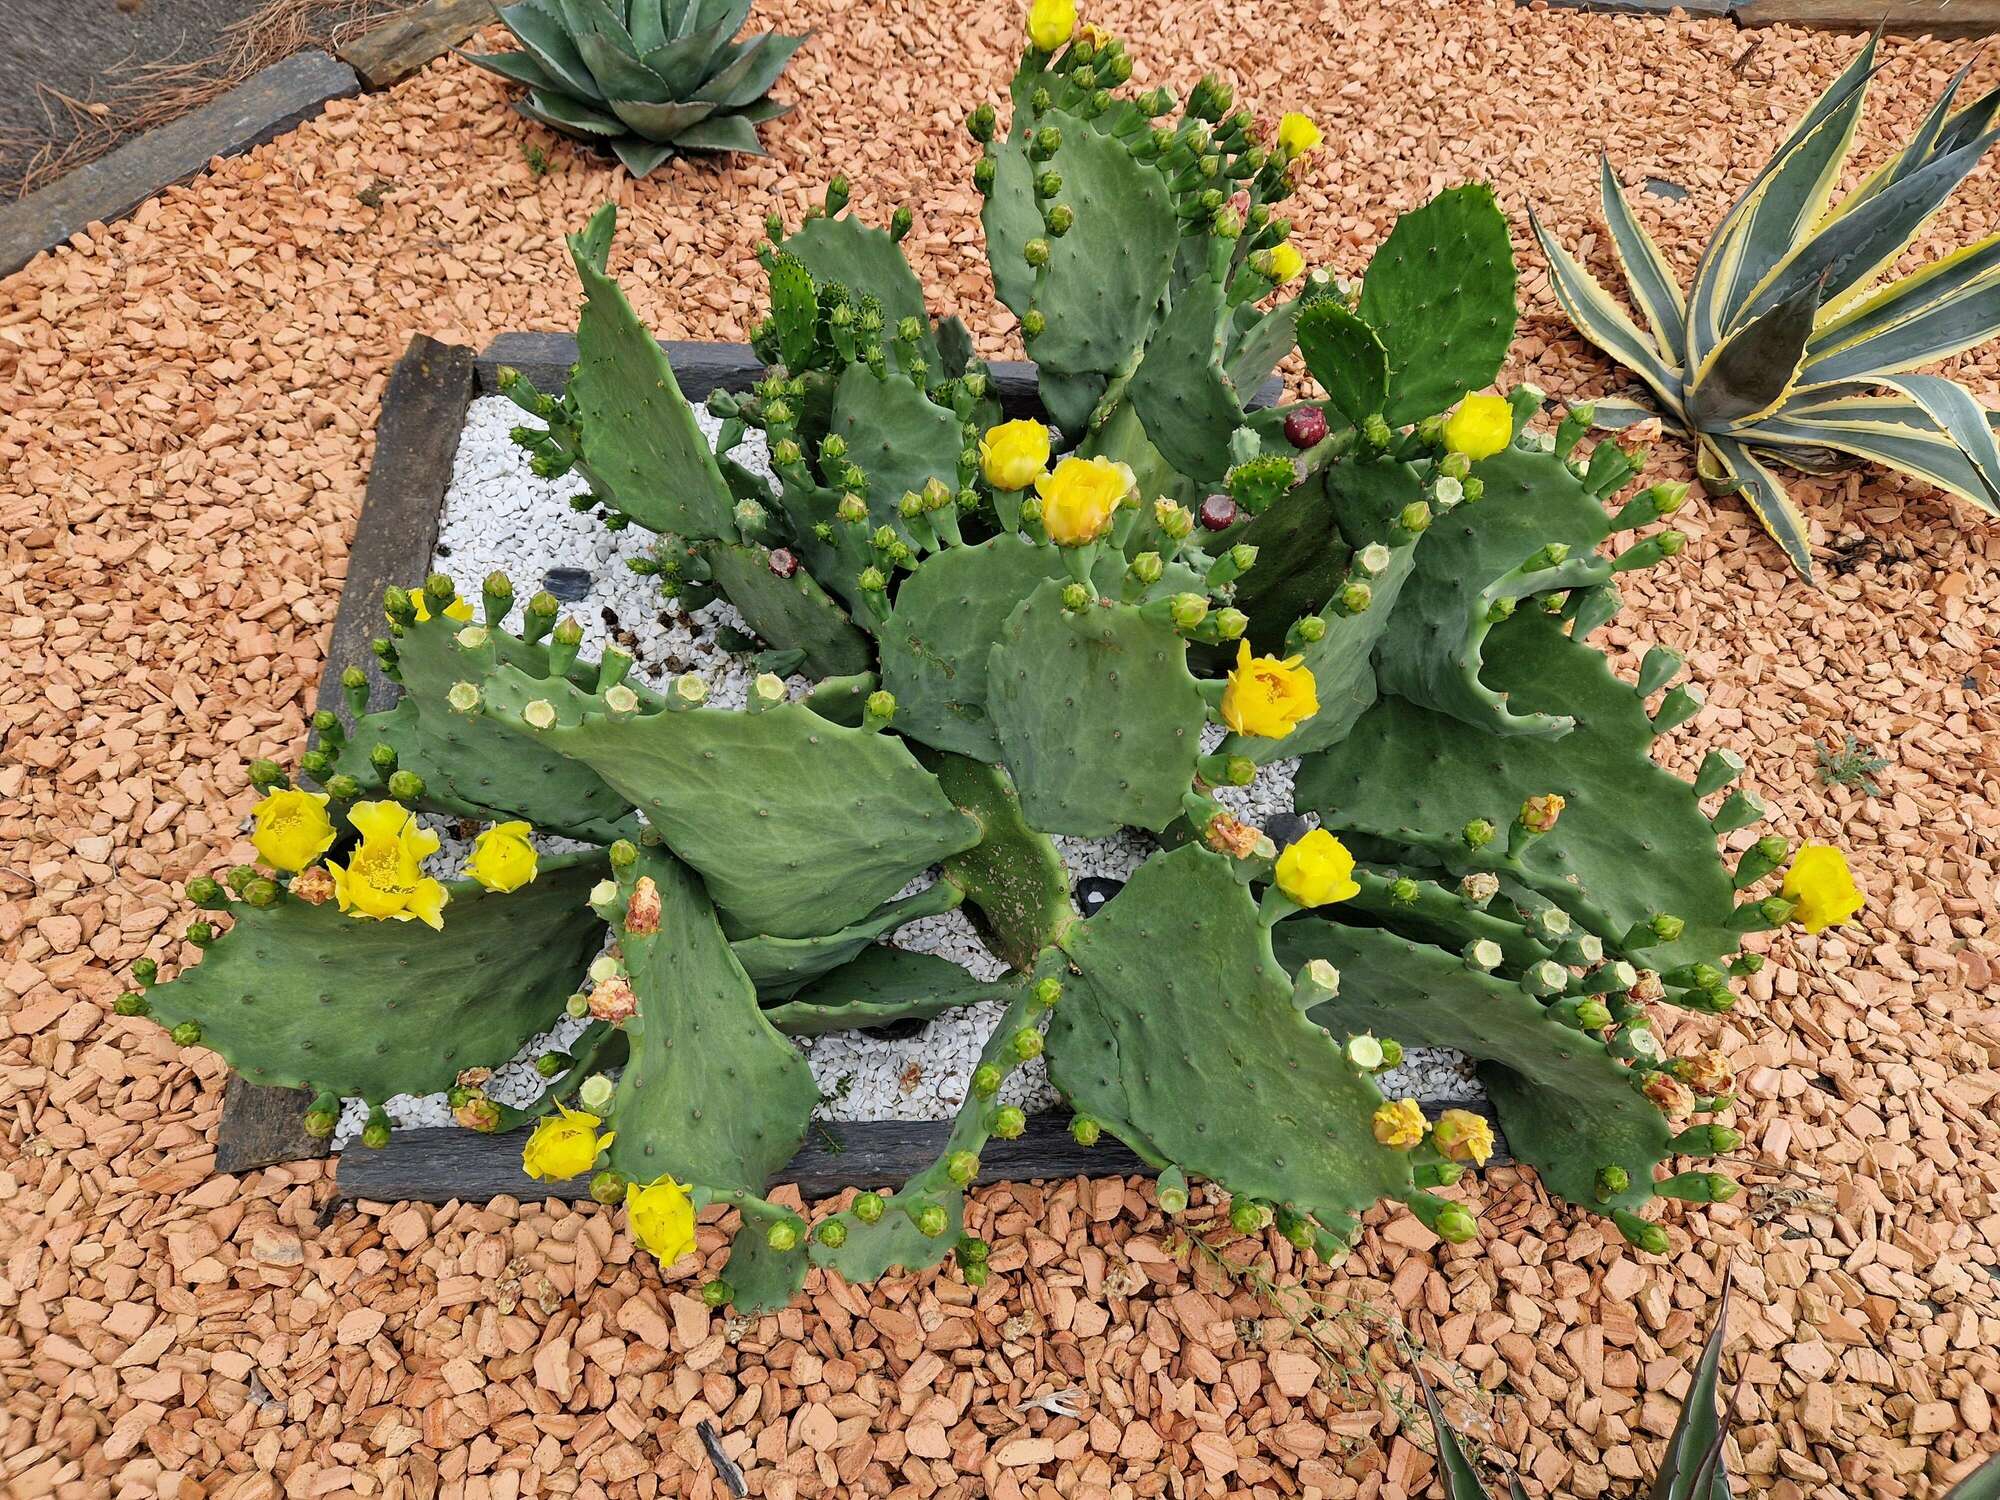 Les cactus qui fleurissent facilement